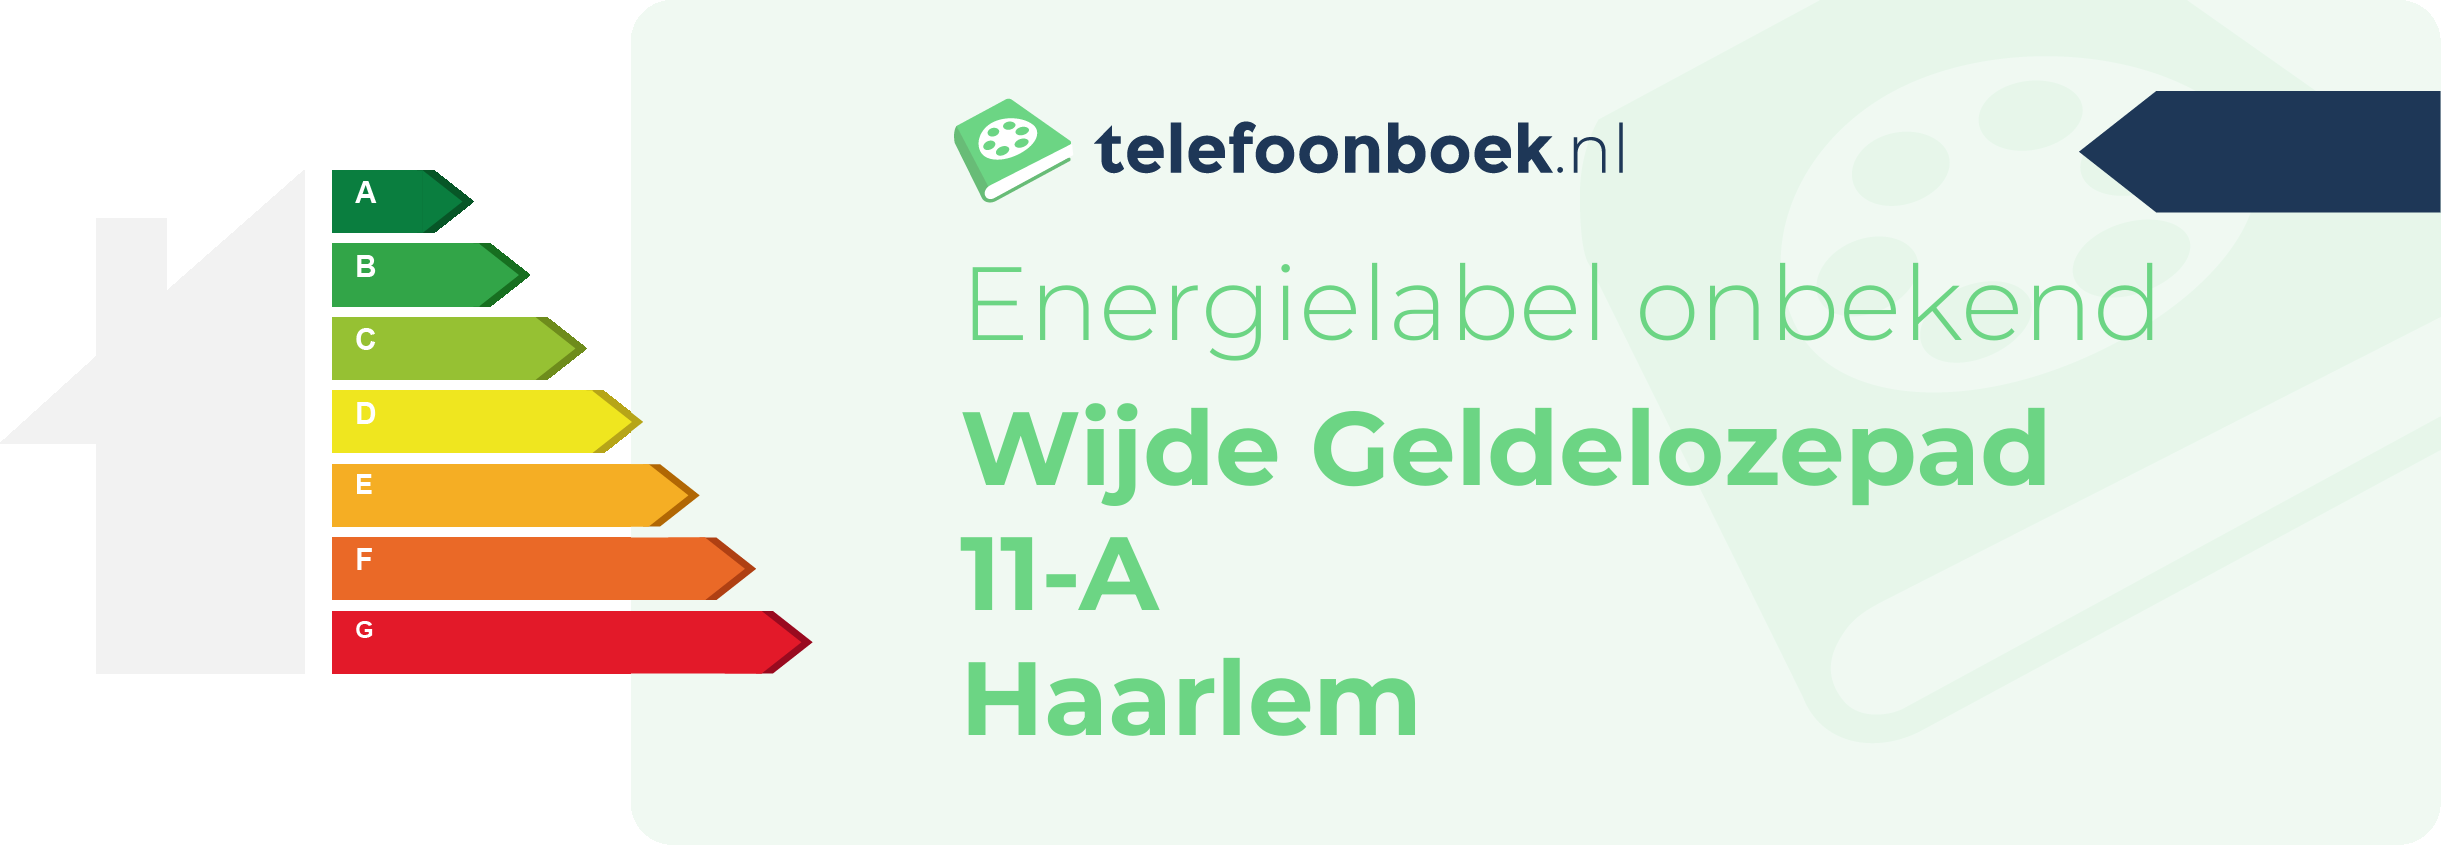 Energielabel Wijde Geldelozepad 11-A Haarlem